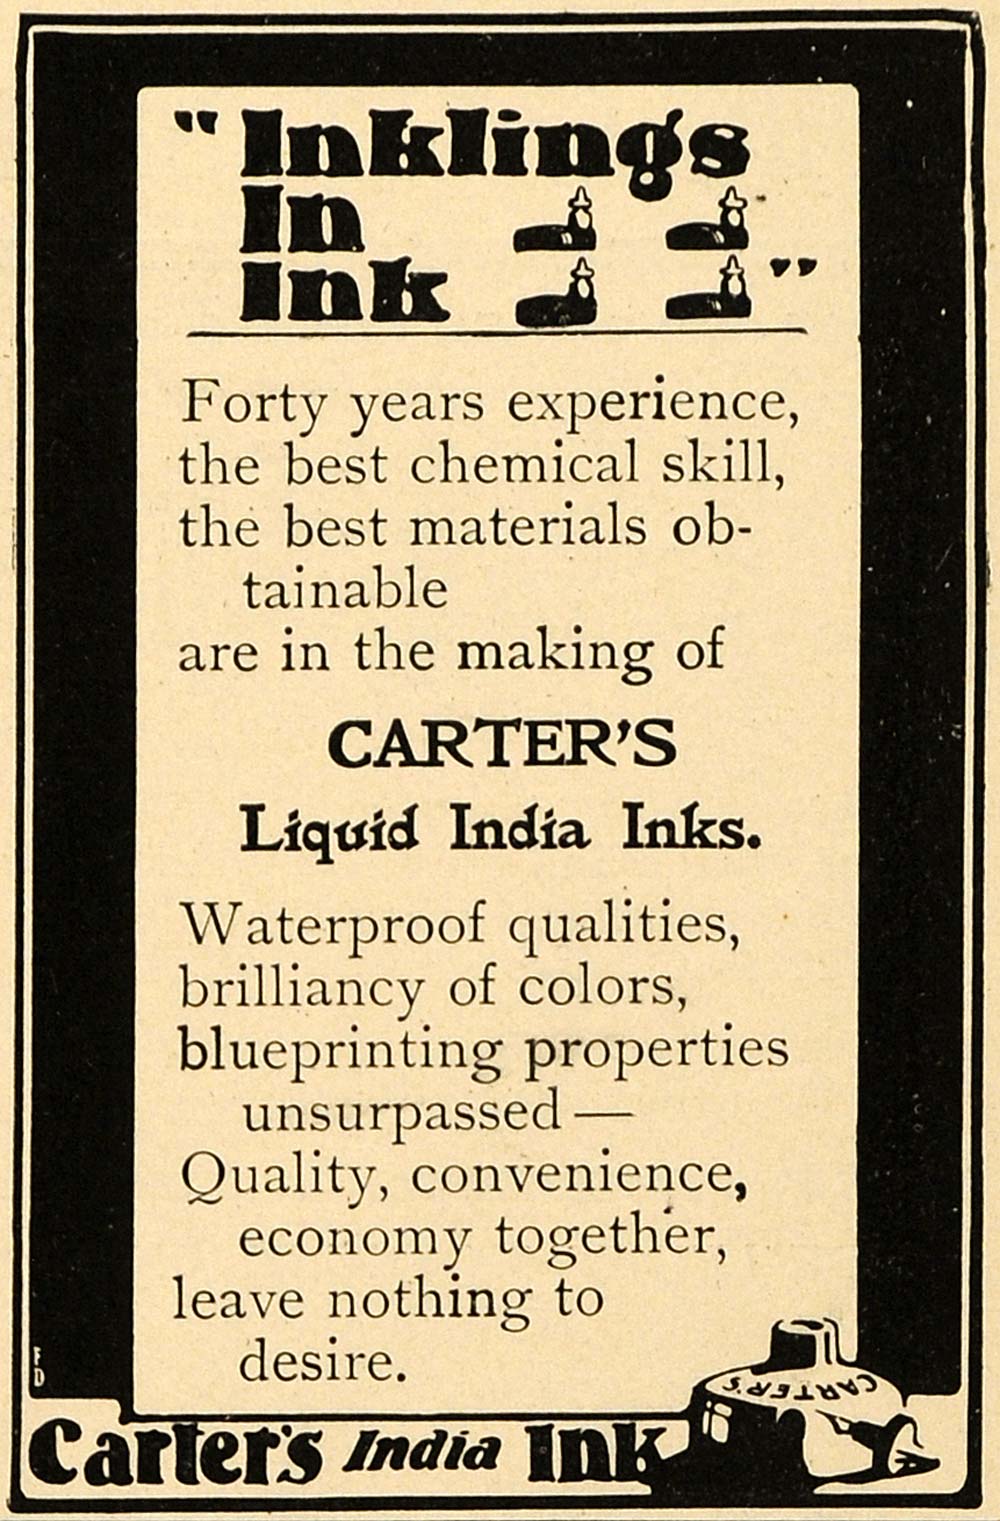 1900 Ad Liquid India Inks Waterproof Chemical Materials - ORIGINAL INS2